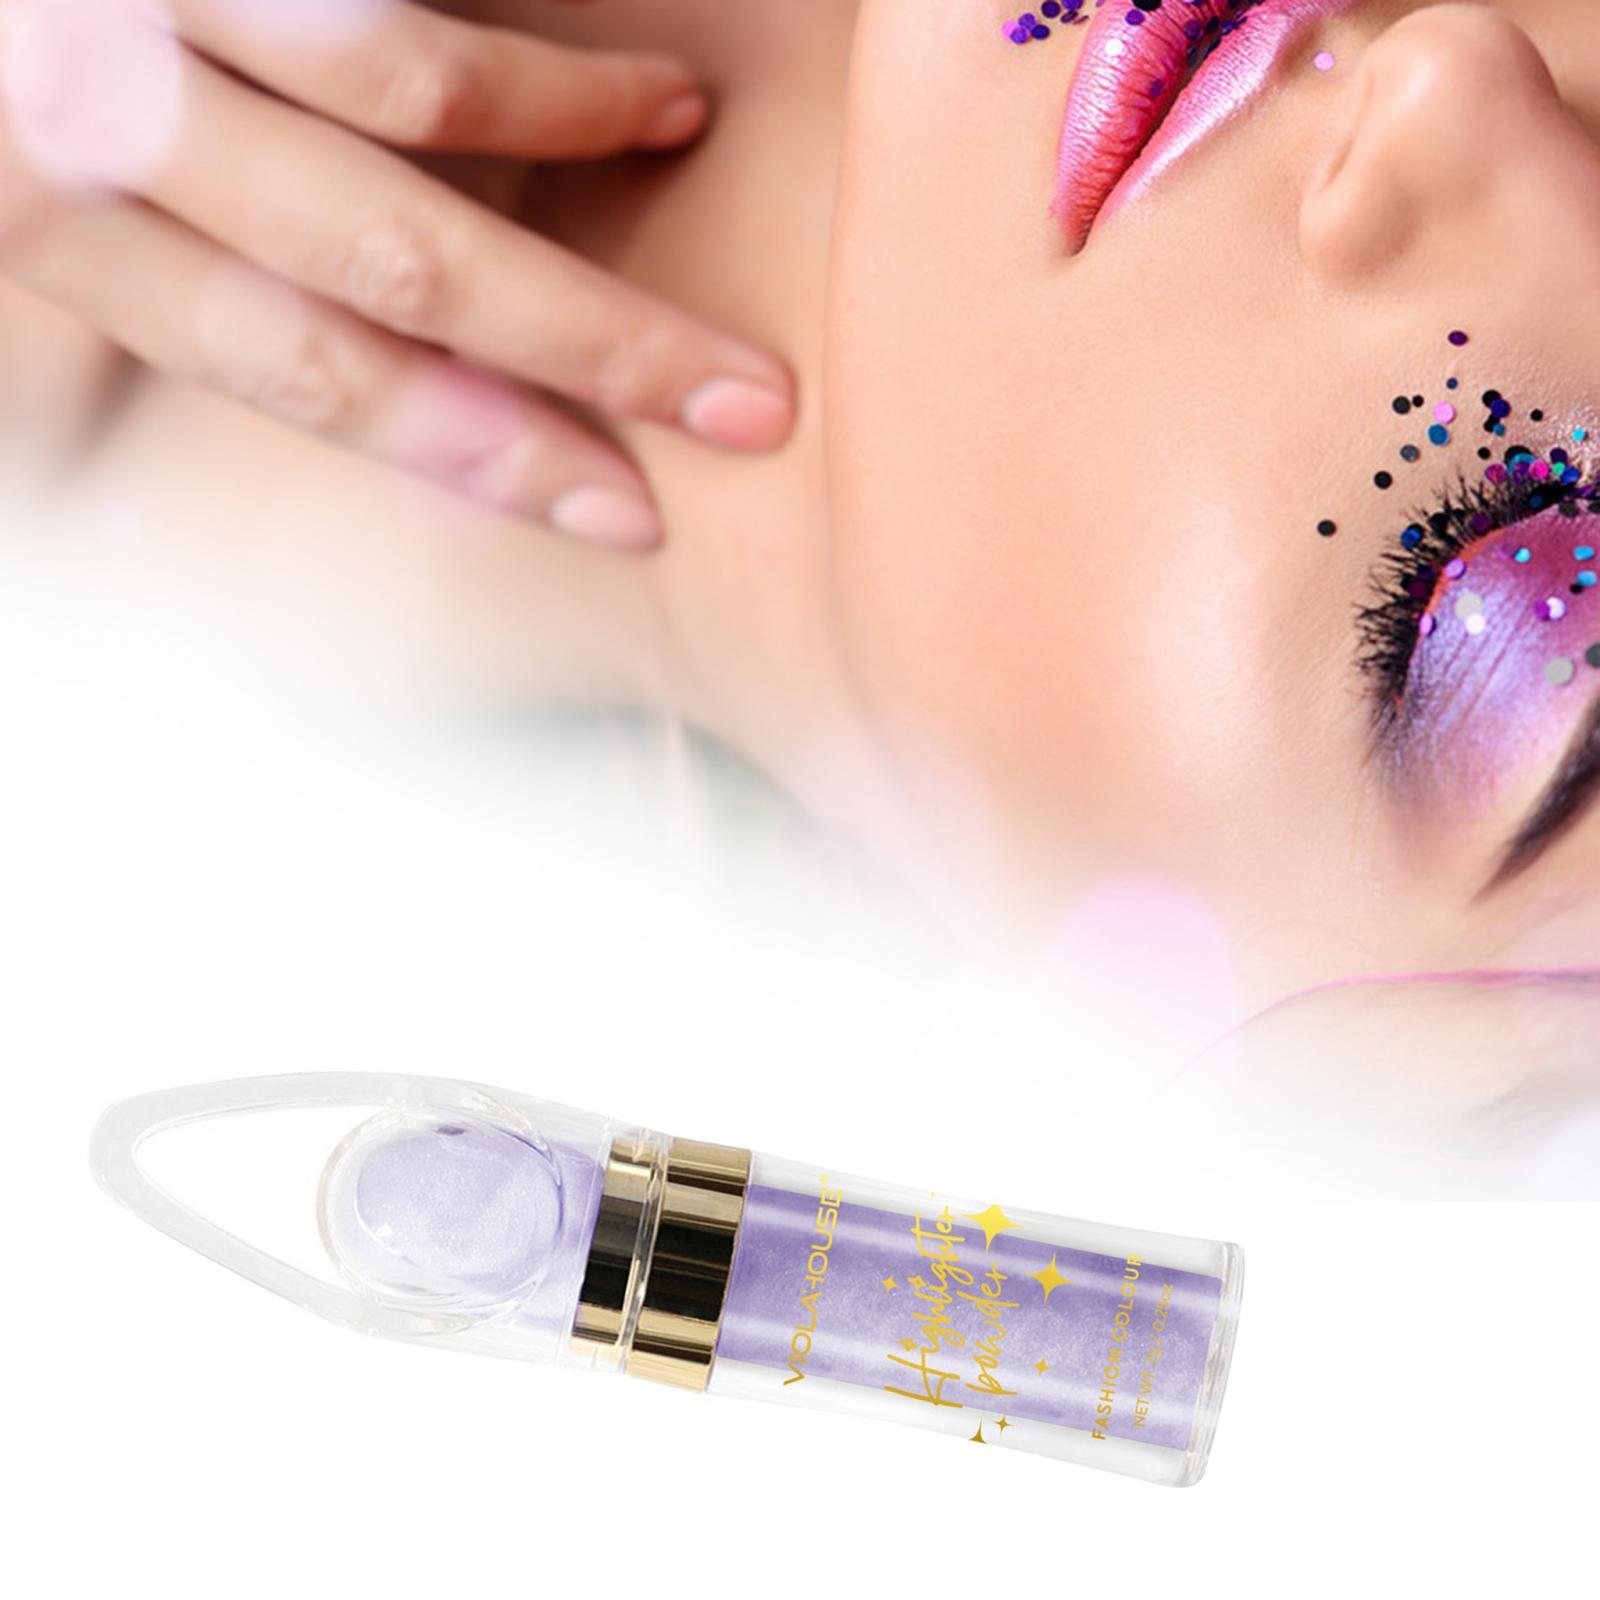 Highlight Stick Patting Powder Body Glitter for Club Festivals Night Parties violet